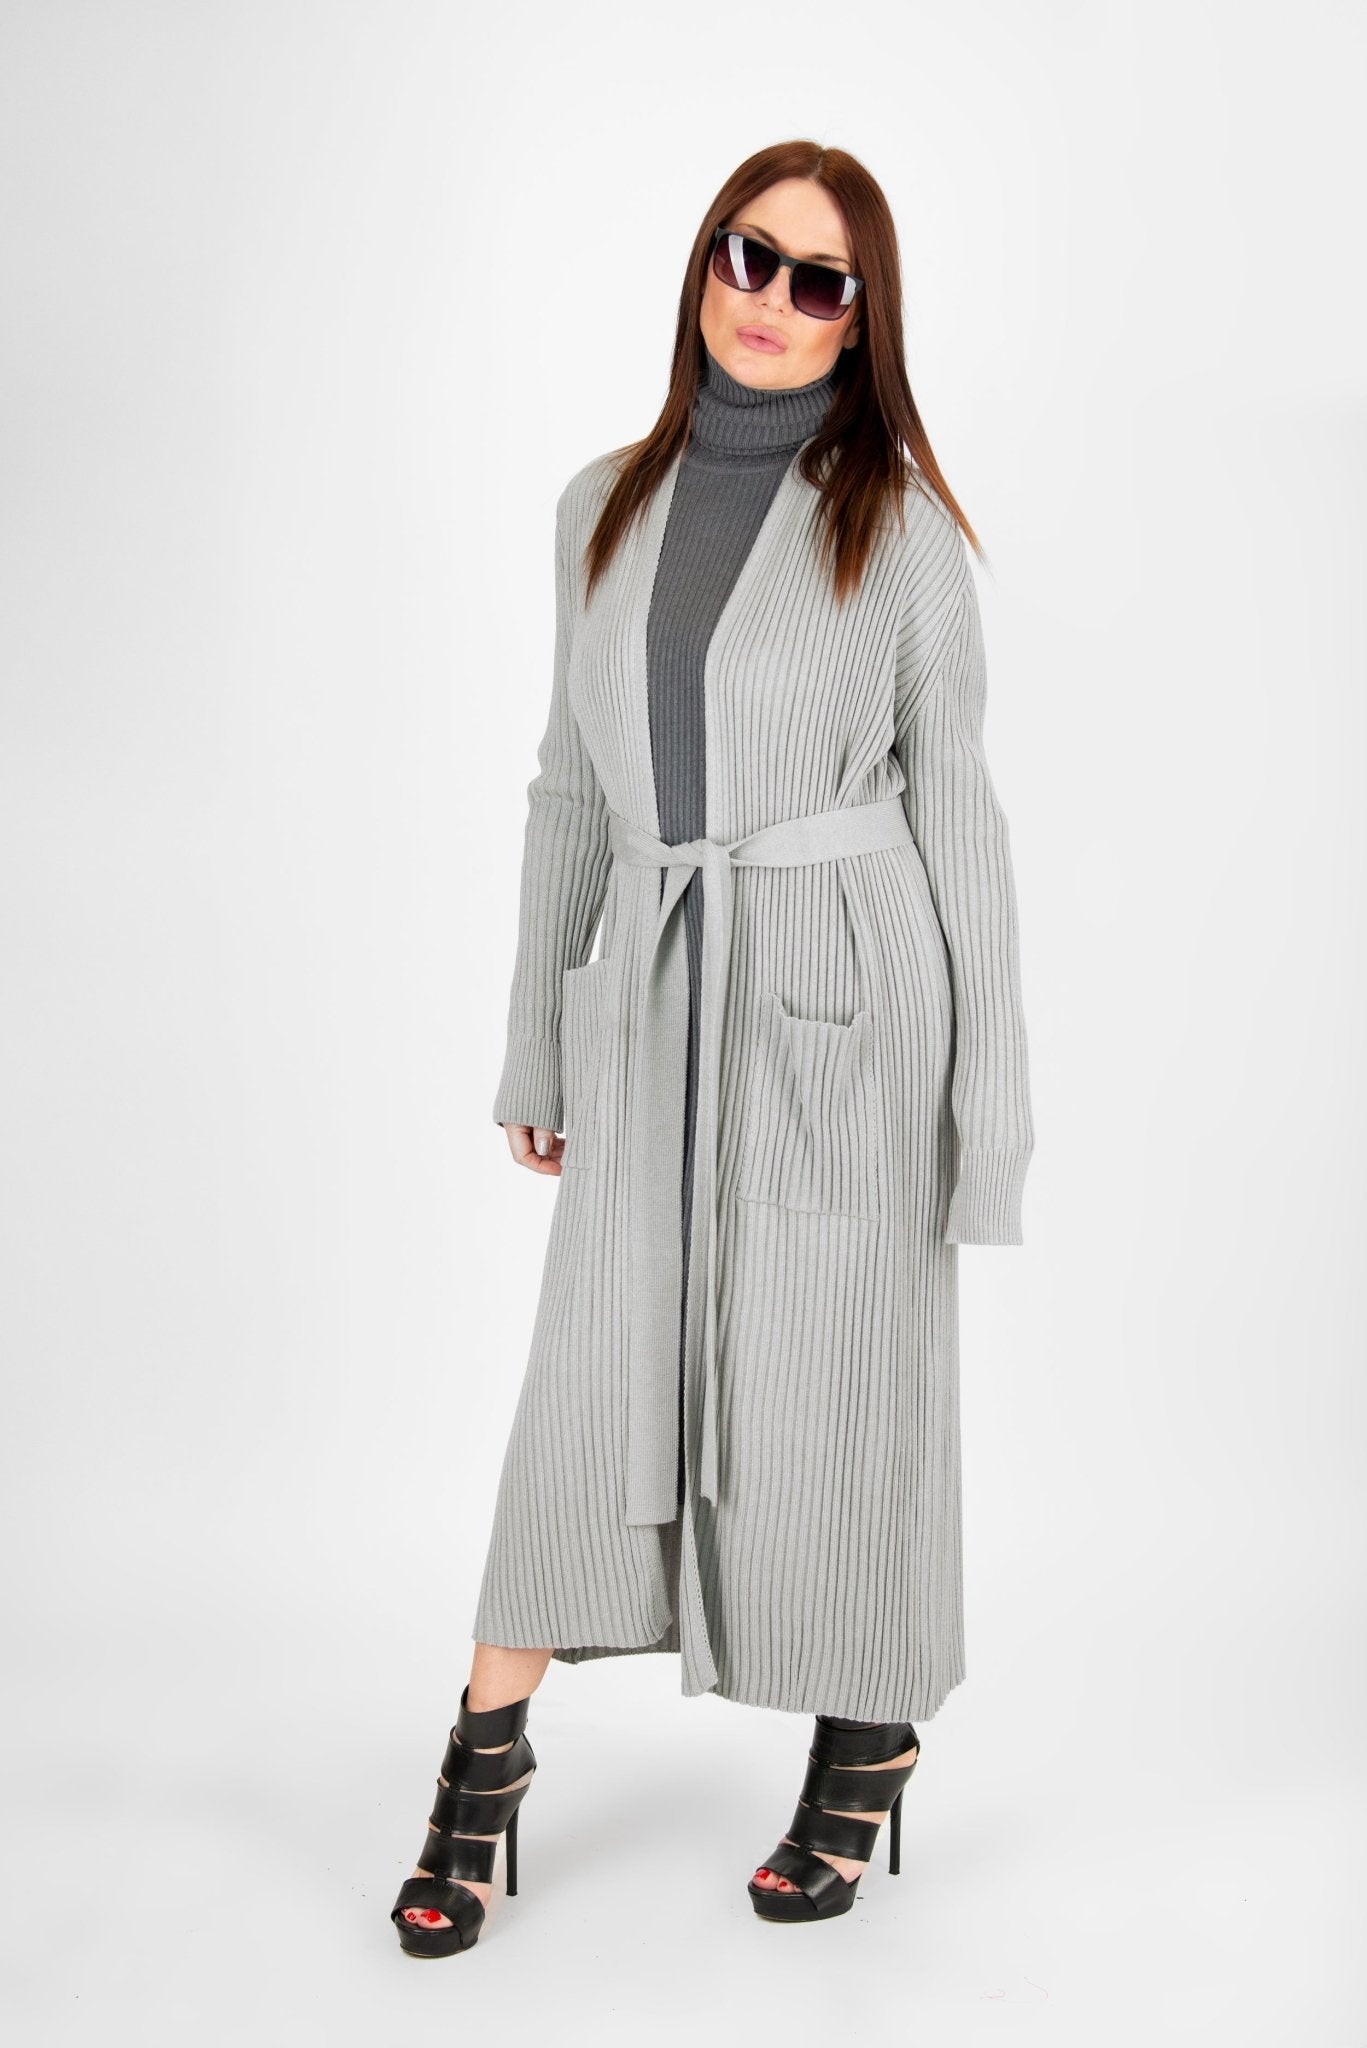 Shop Light Grey cotton knitting Vest AMY SALE for Women | EUG FASHION